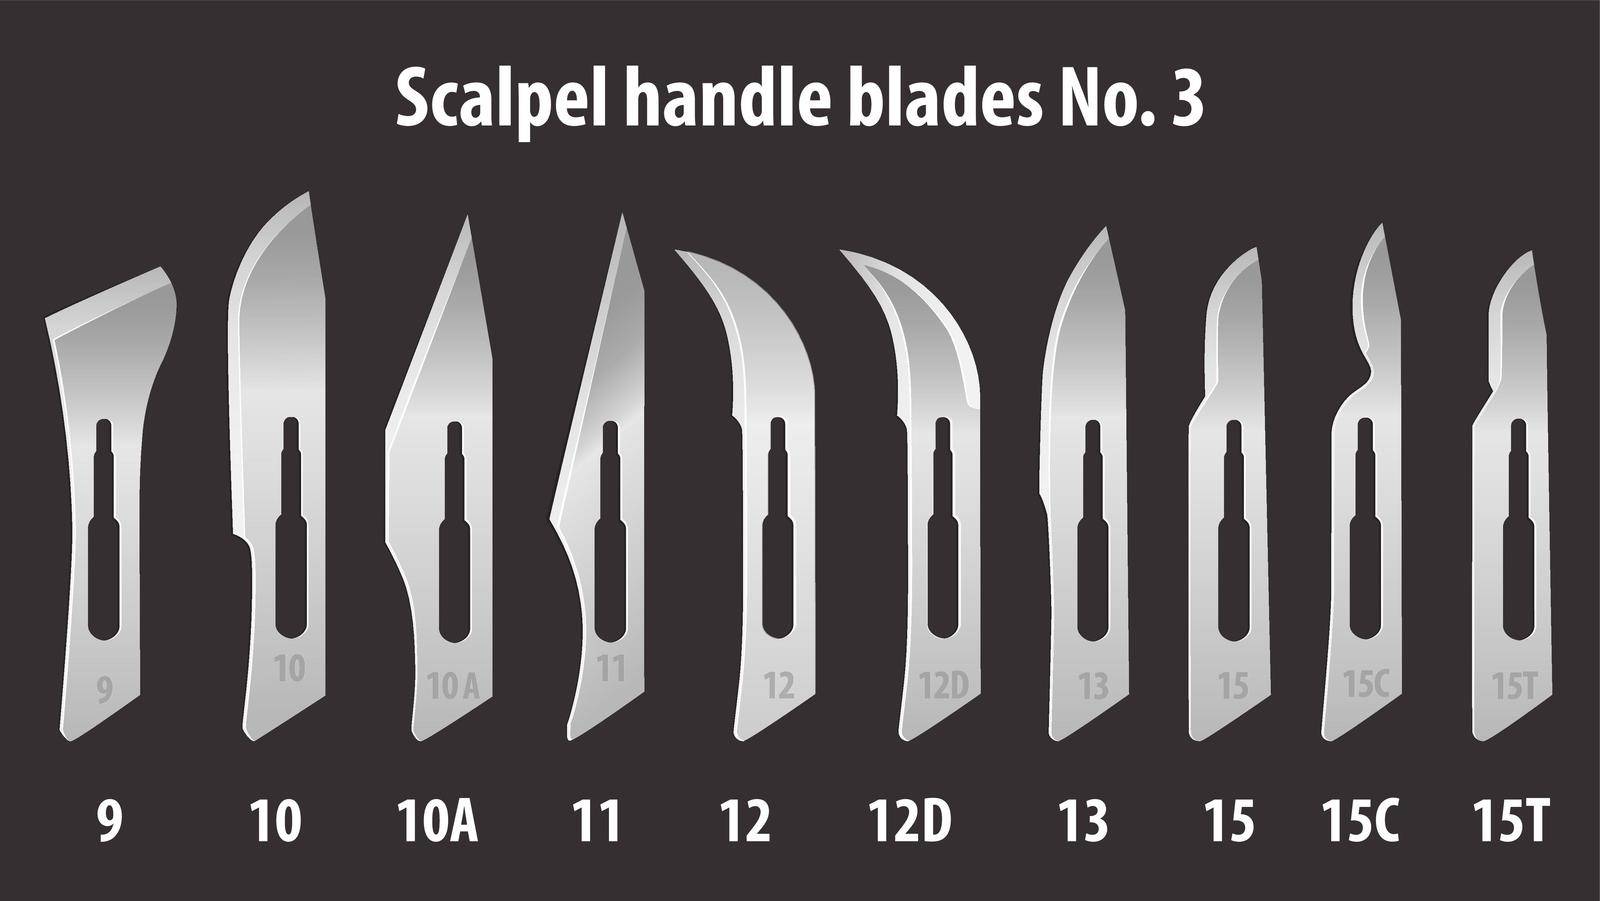 Set of scalpel handle blades No. 3. Manual surgical medical instrument. Vector illustration.